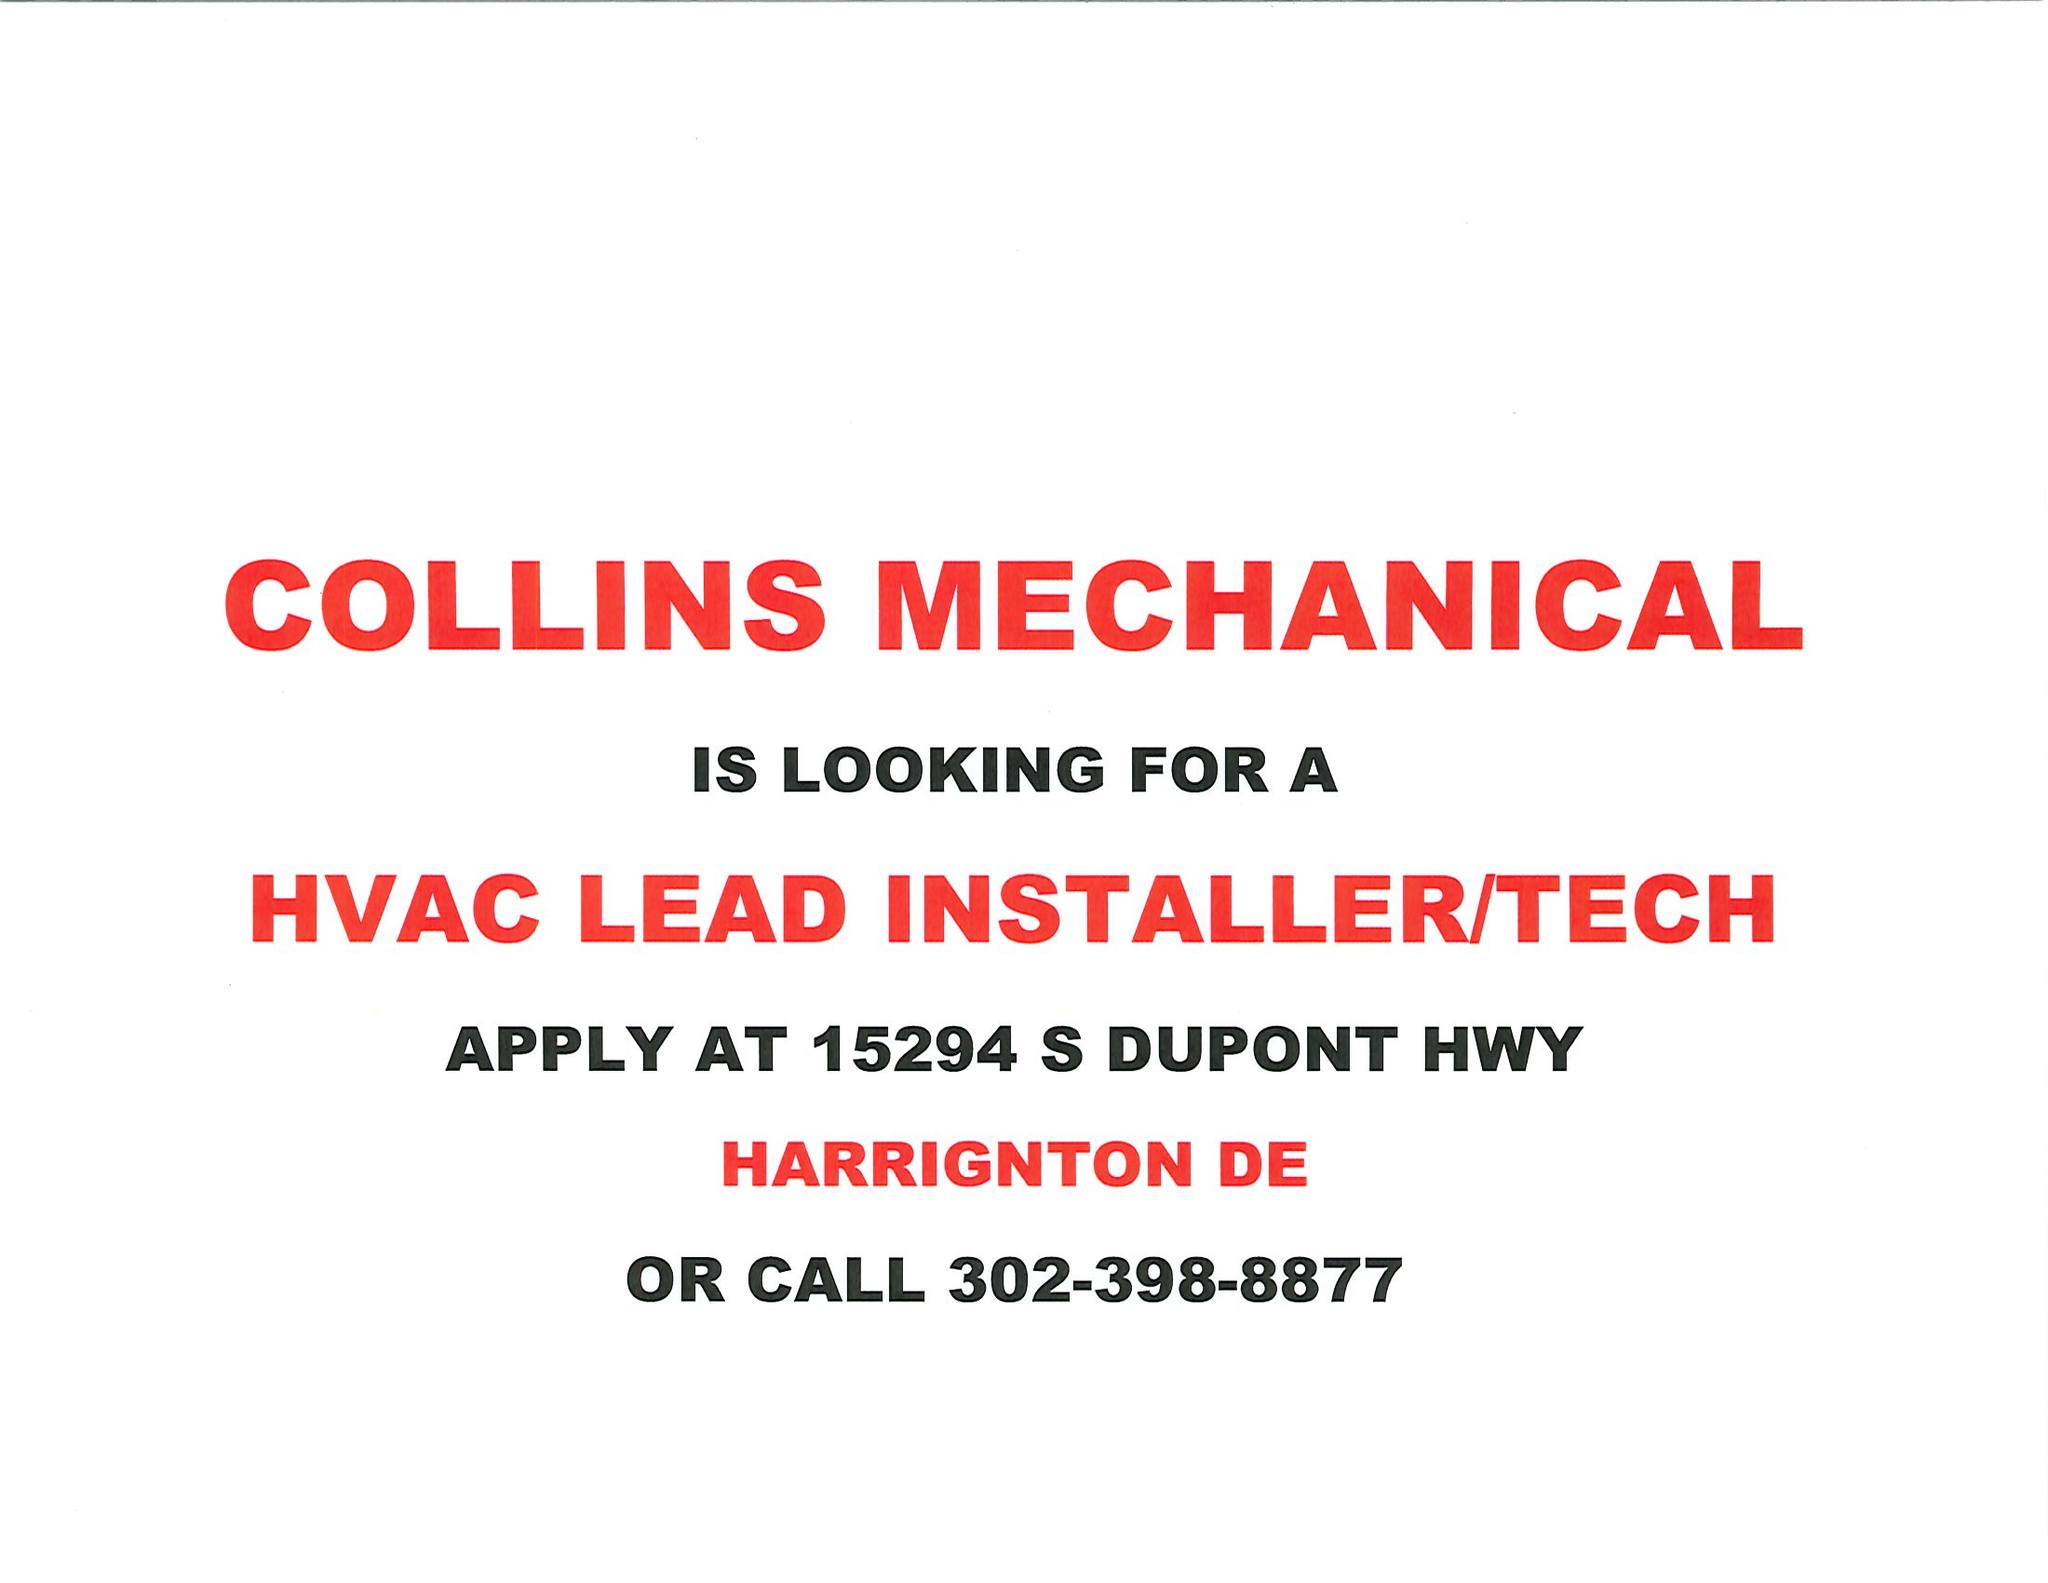 Collins Mechanical, Inc. 15294 S Dupont Hwy, Harrington Delaware 19952